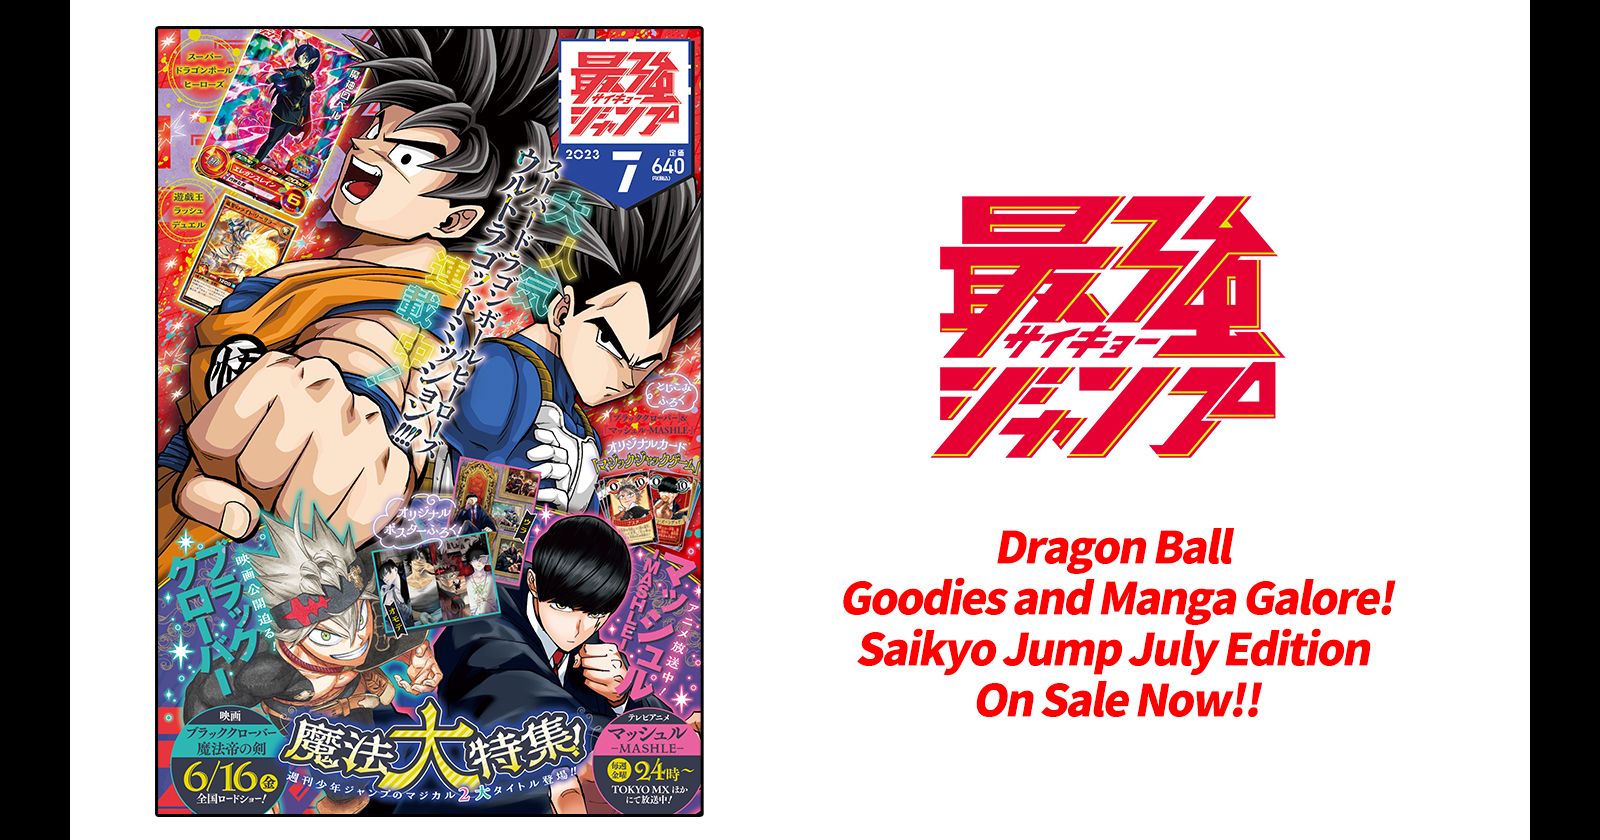 Dragon Ball News and Manga Galore! Saikyo Jump's Super-Sized July Edition On Sale Now!!